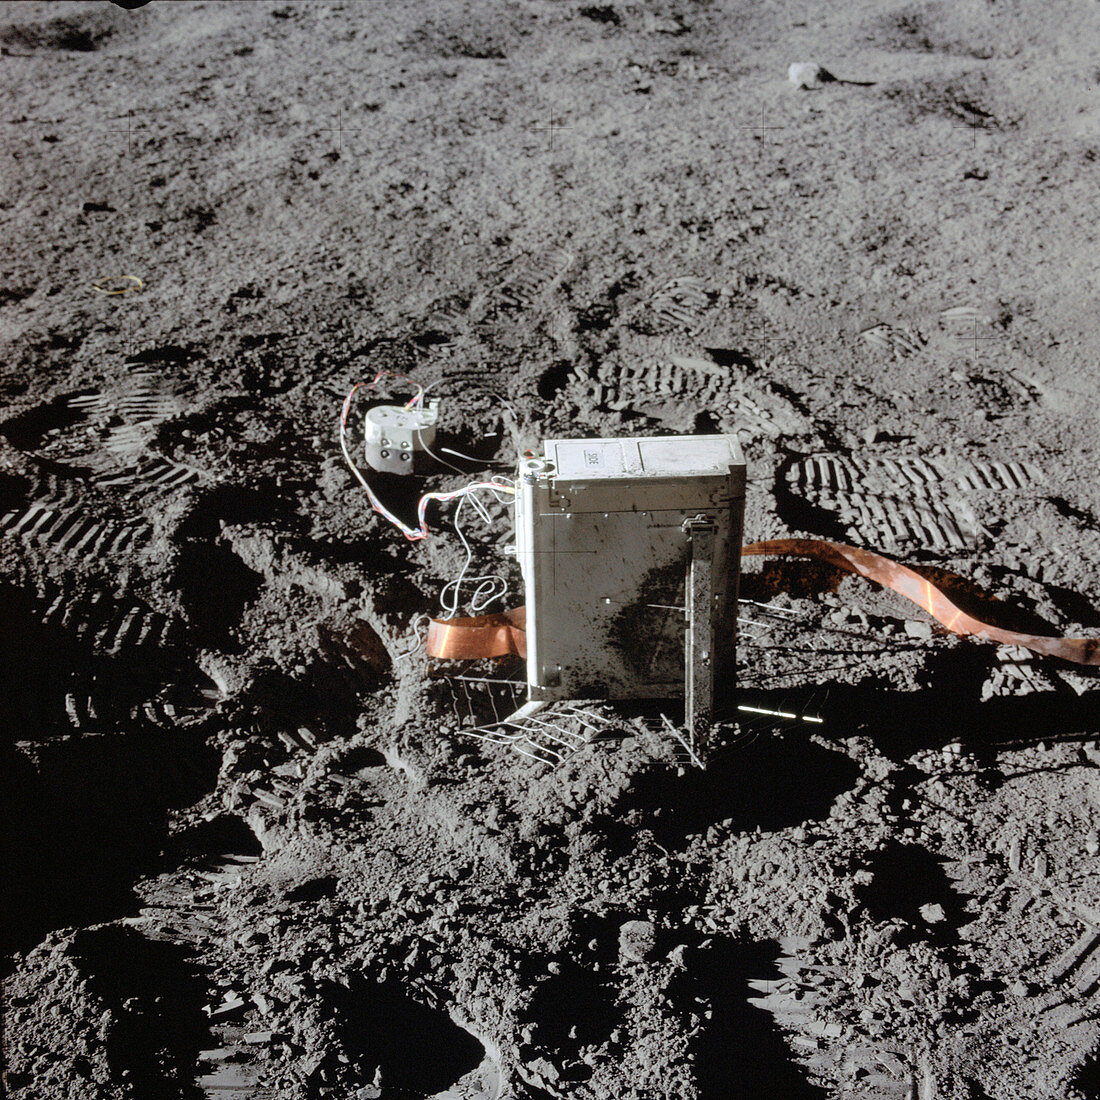 Apollo 14 equipment on the moon